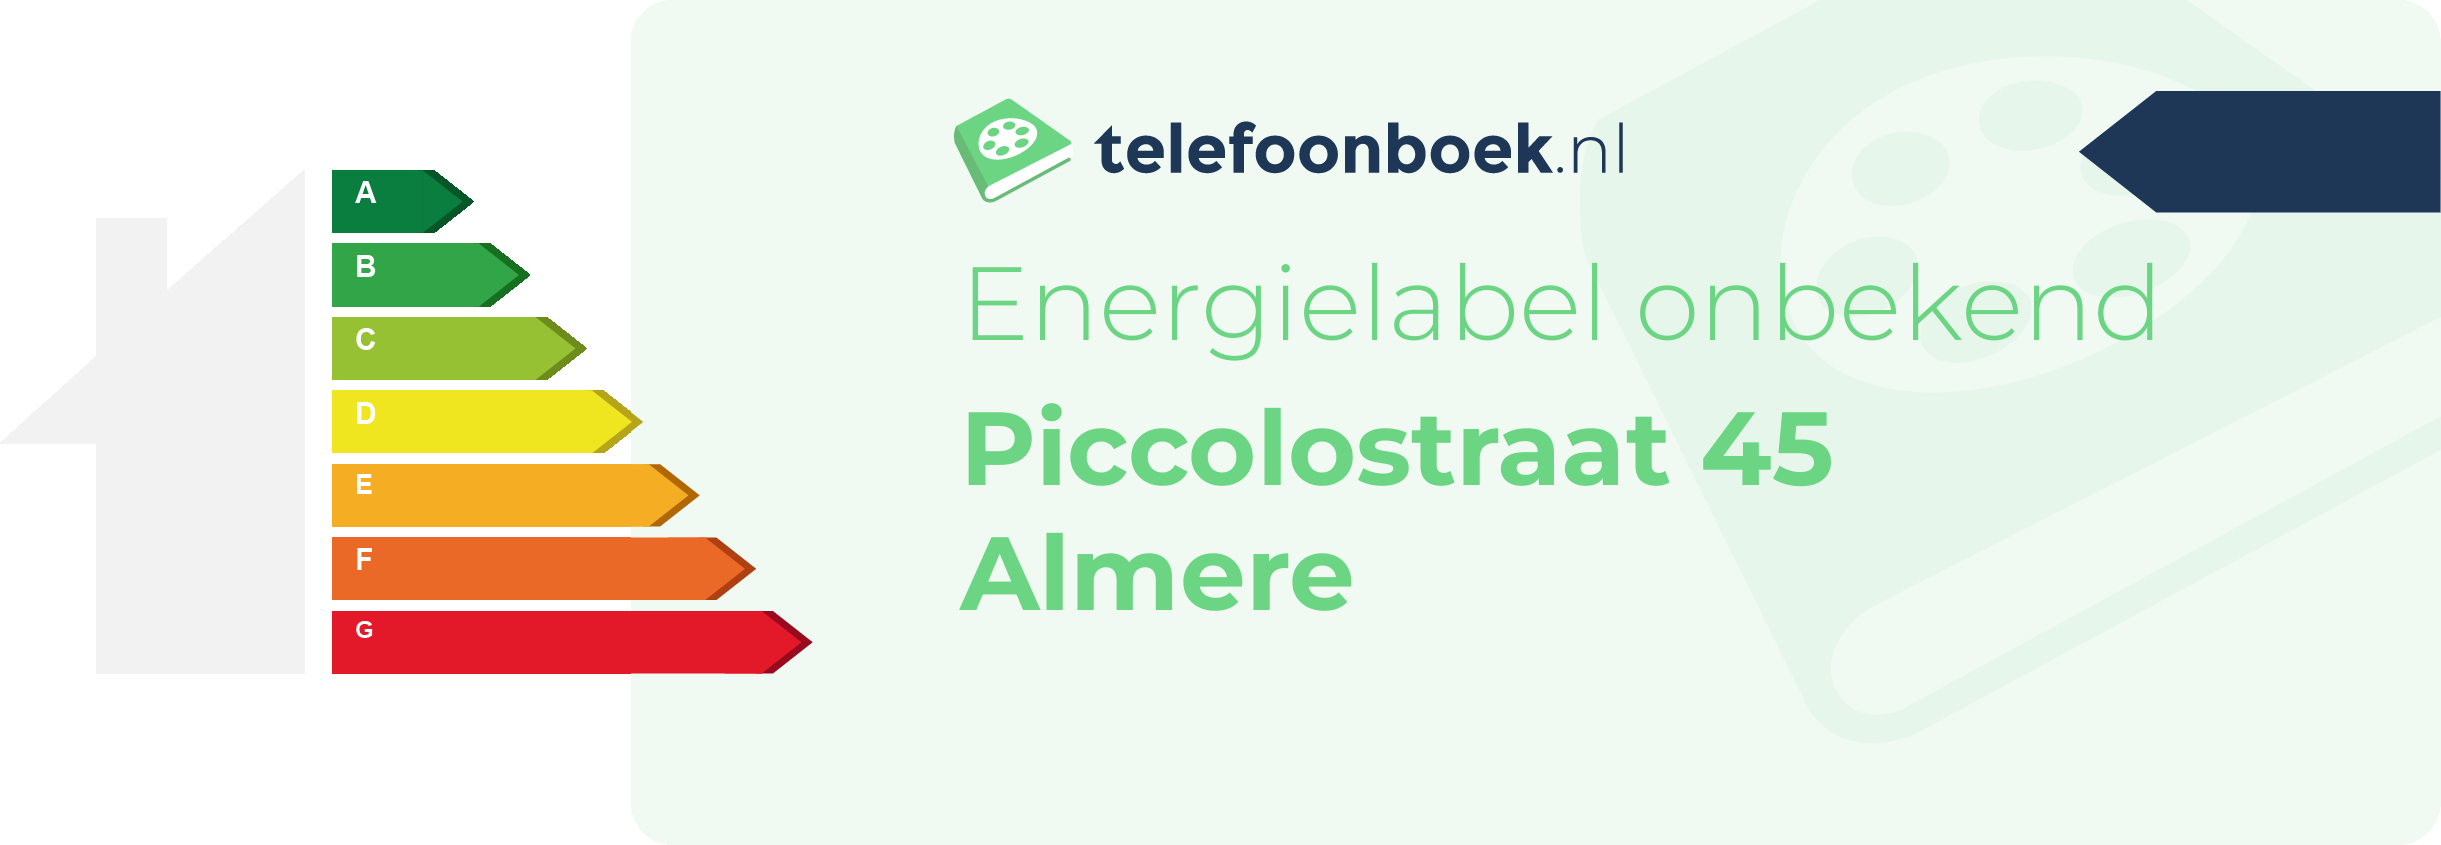 Energielabel Piccolostraat 45 Almere